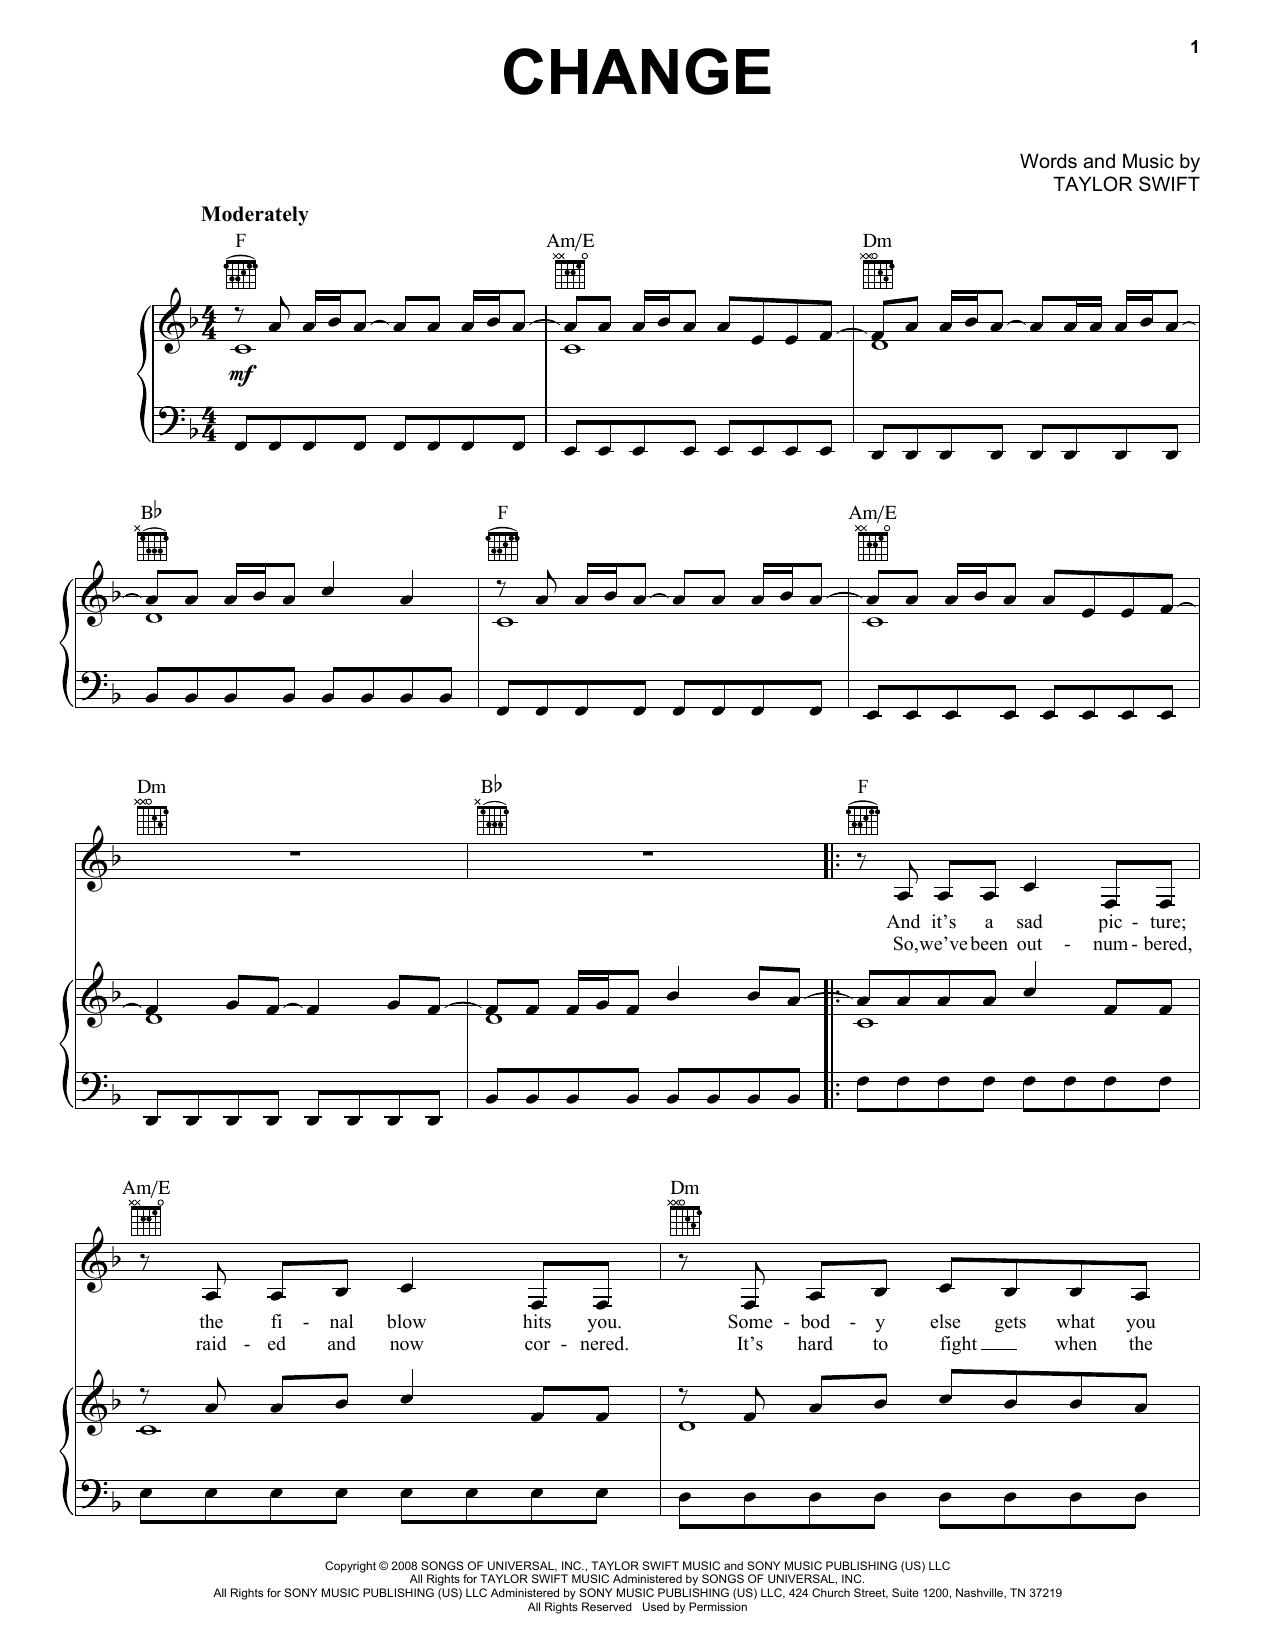 Taylor Swift Change Sheet Music Notes & Chords for Ukulele - Download or Print PDF